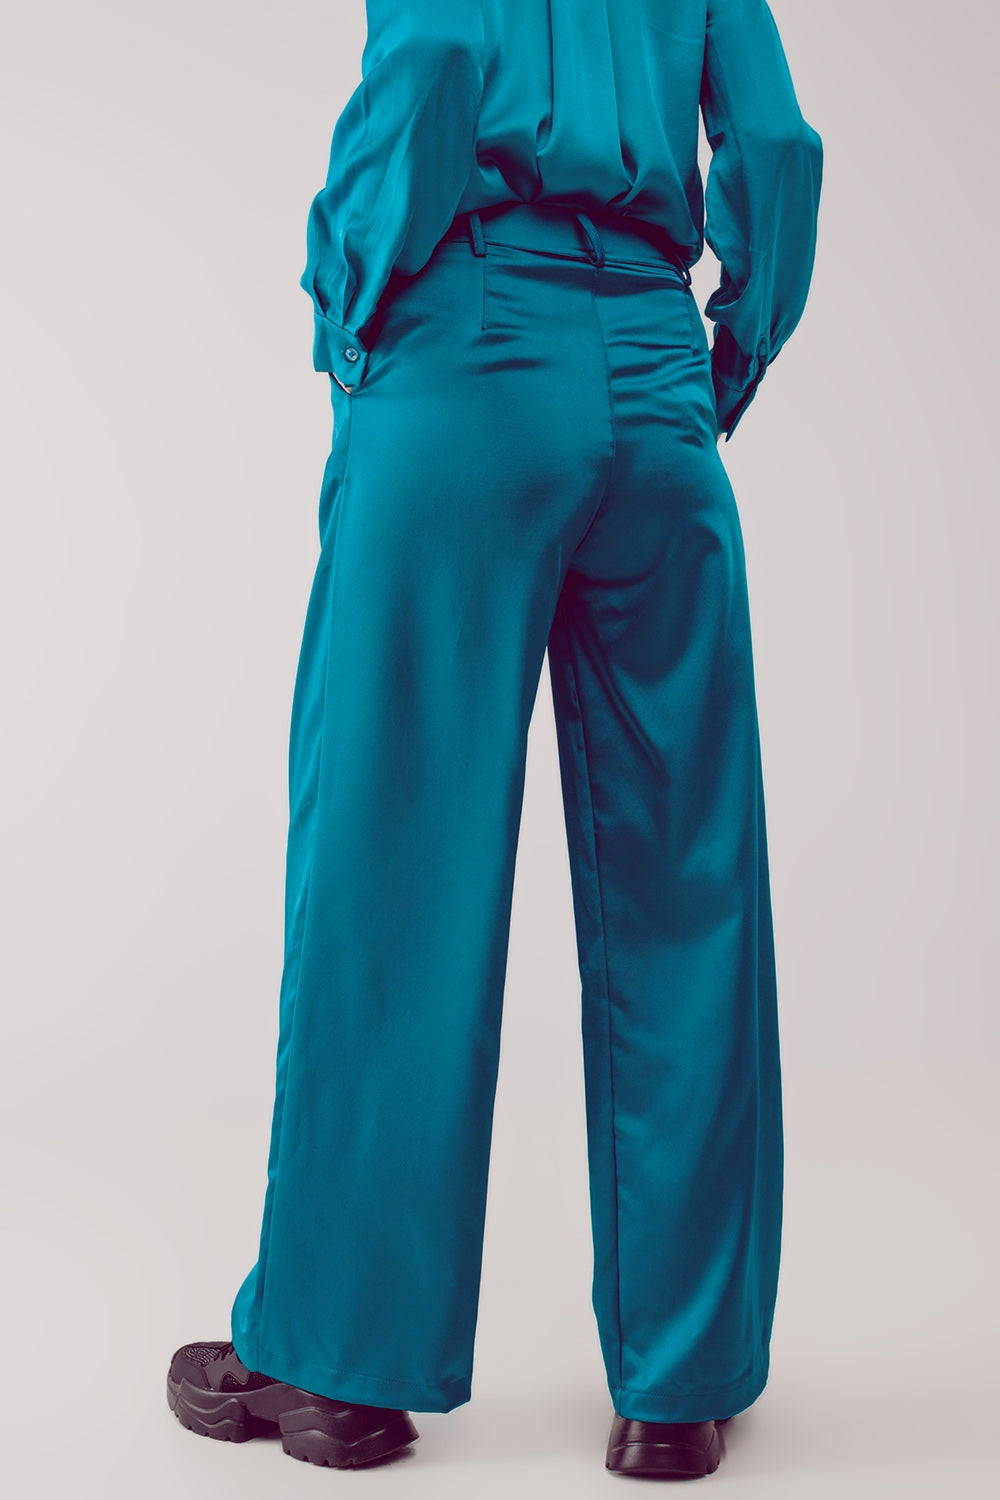 Palazzo pleated pants in turquoise Szua Store